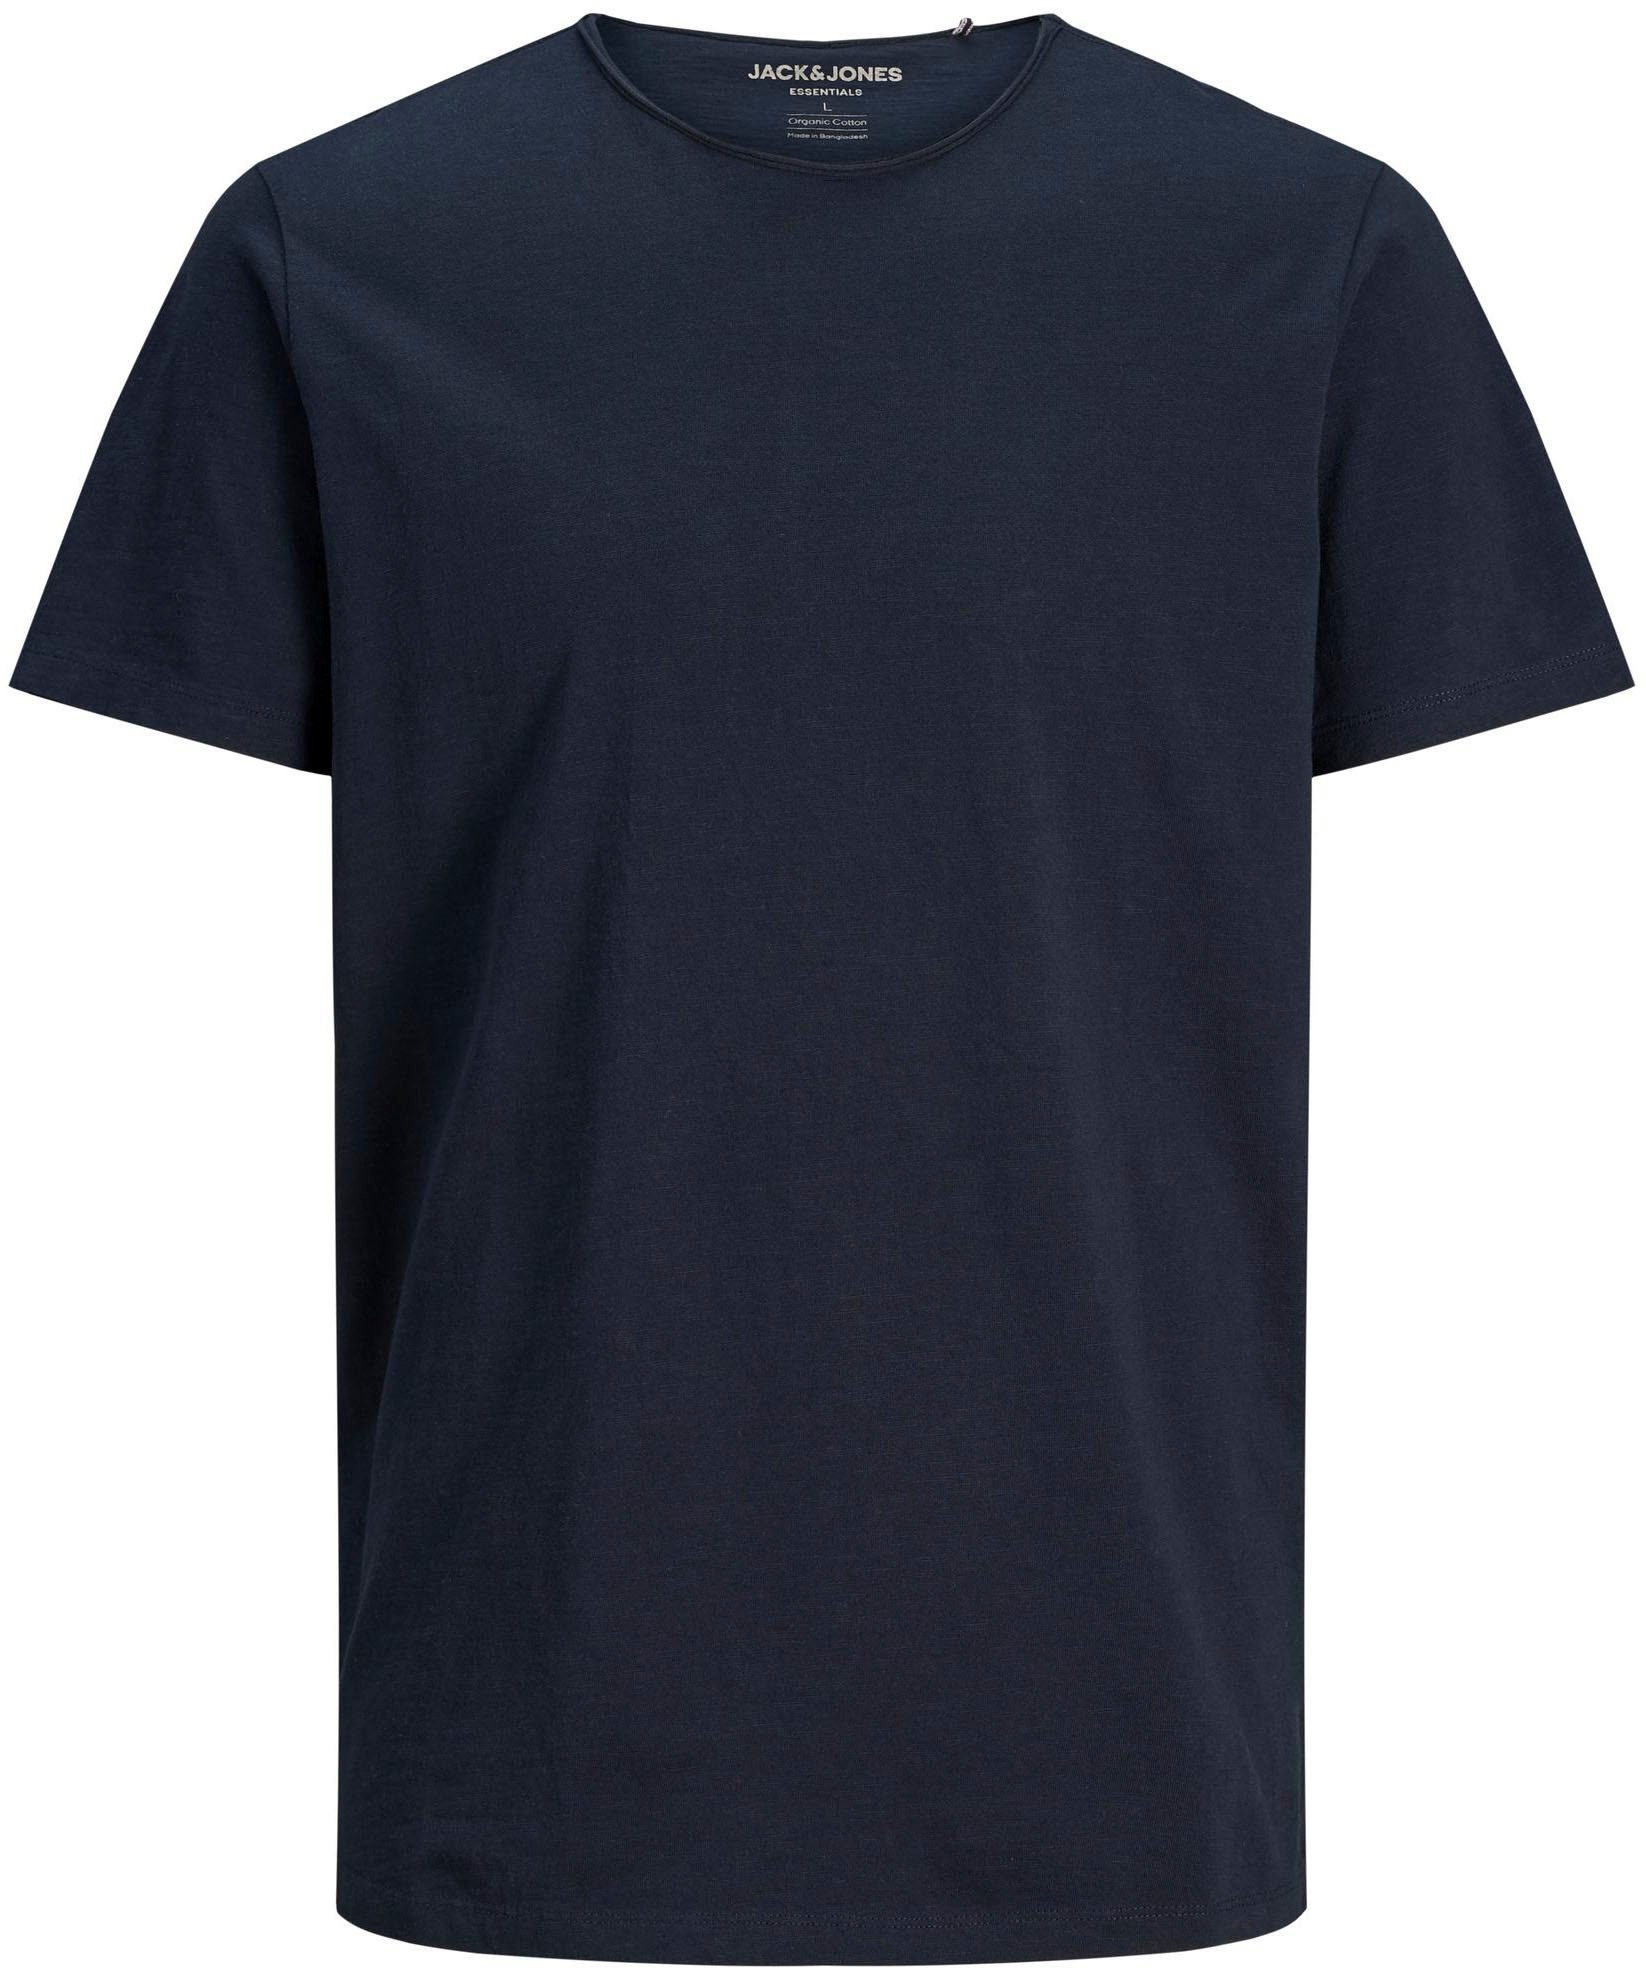 BASHER & Jack TEE Navy Jones T-Shirt Blazer